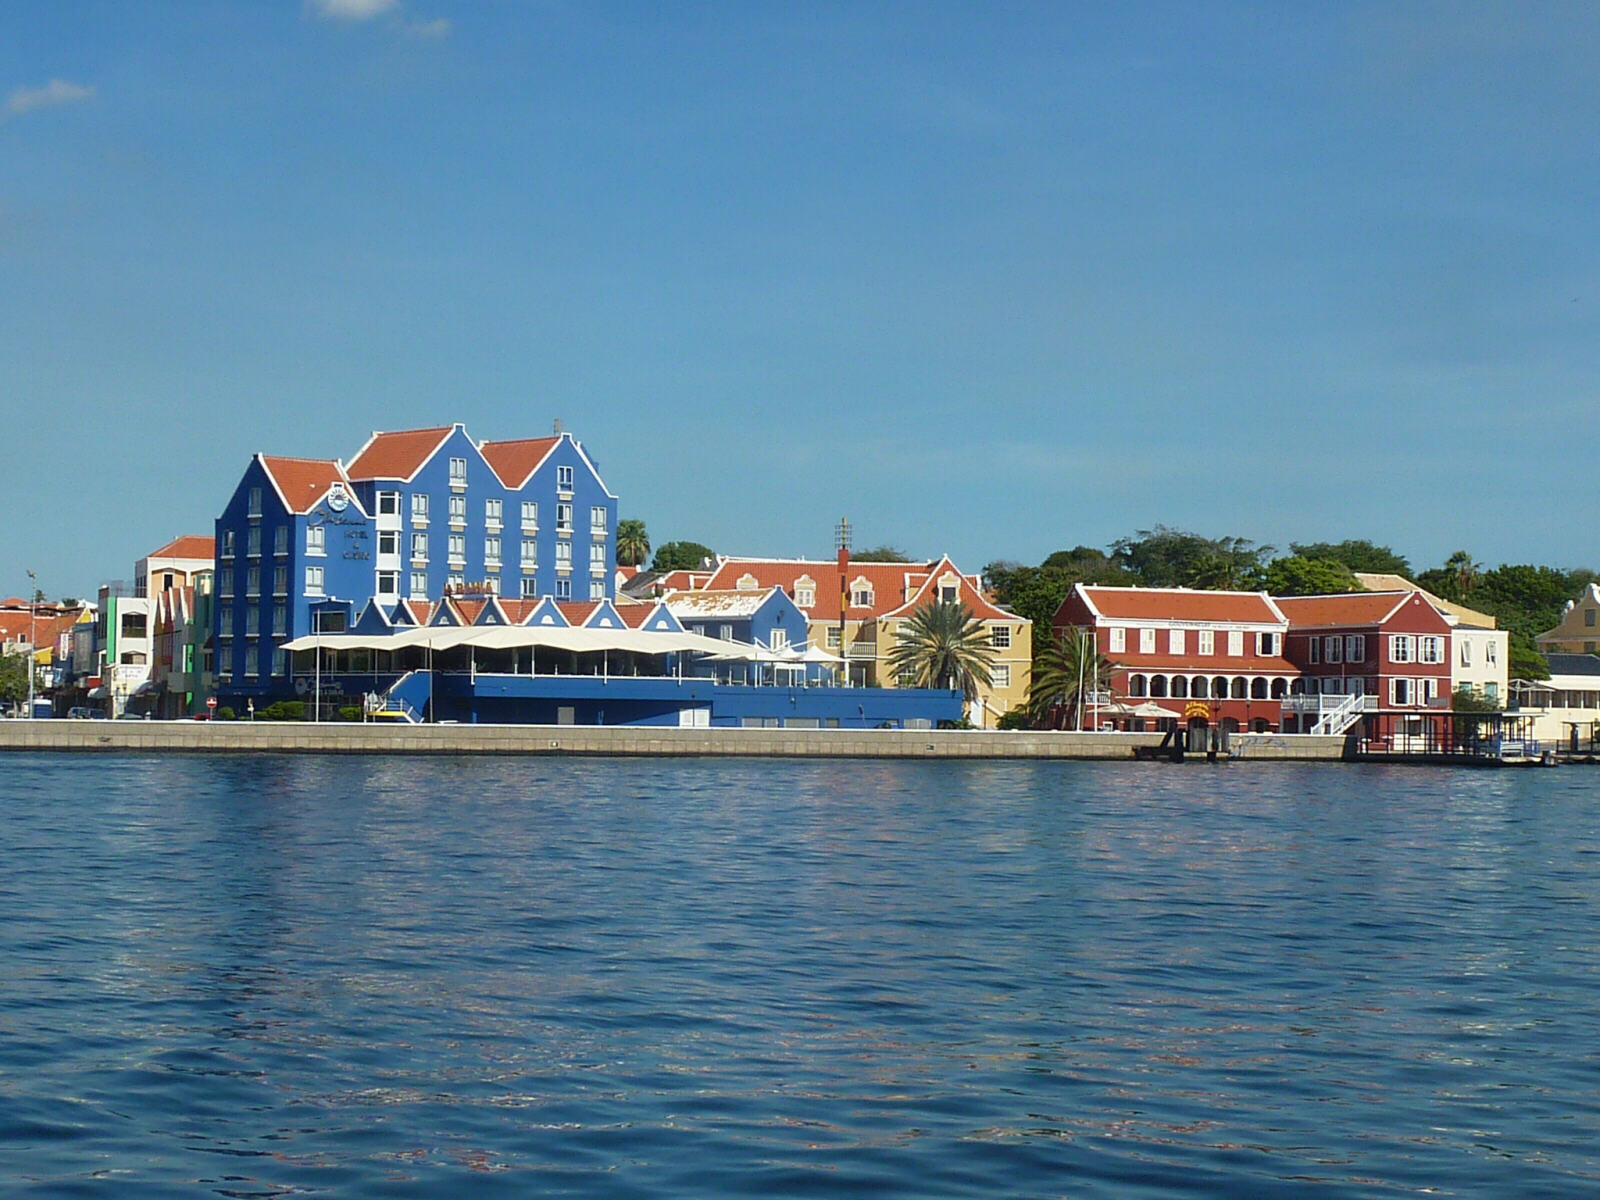 Hotel Otrobanda, Willemstad, Curacao